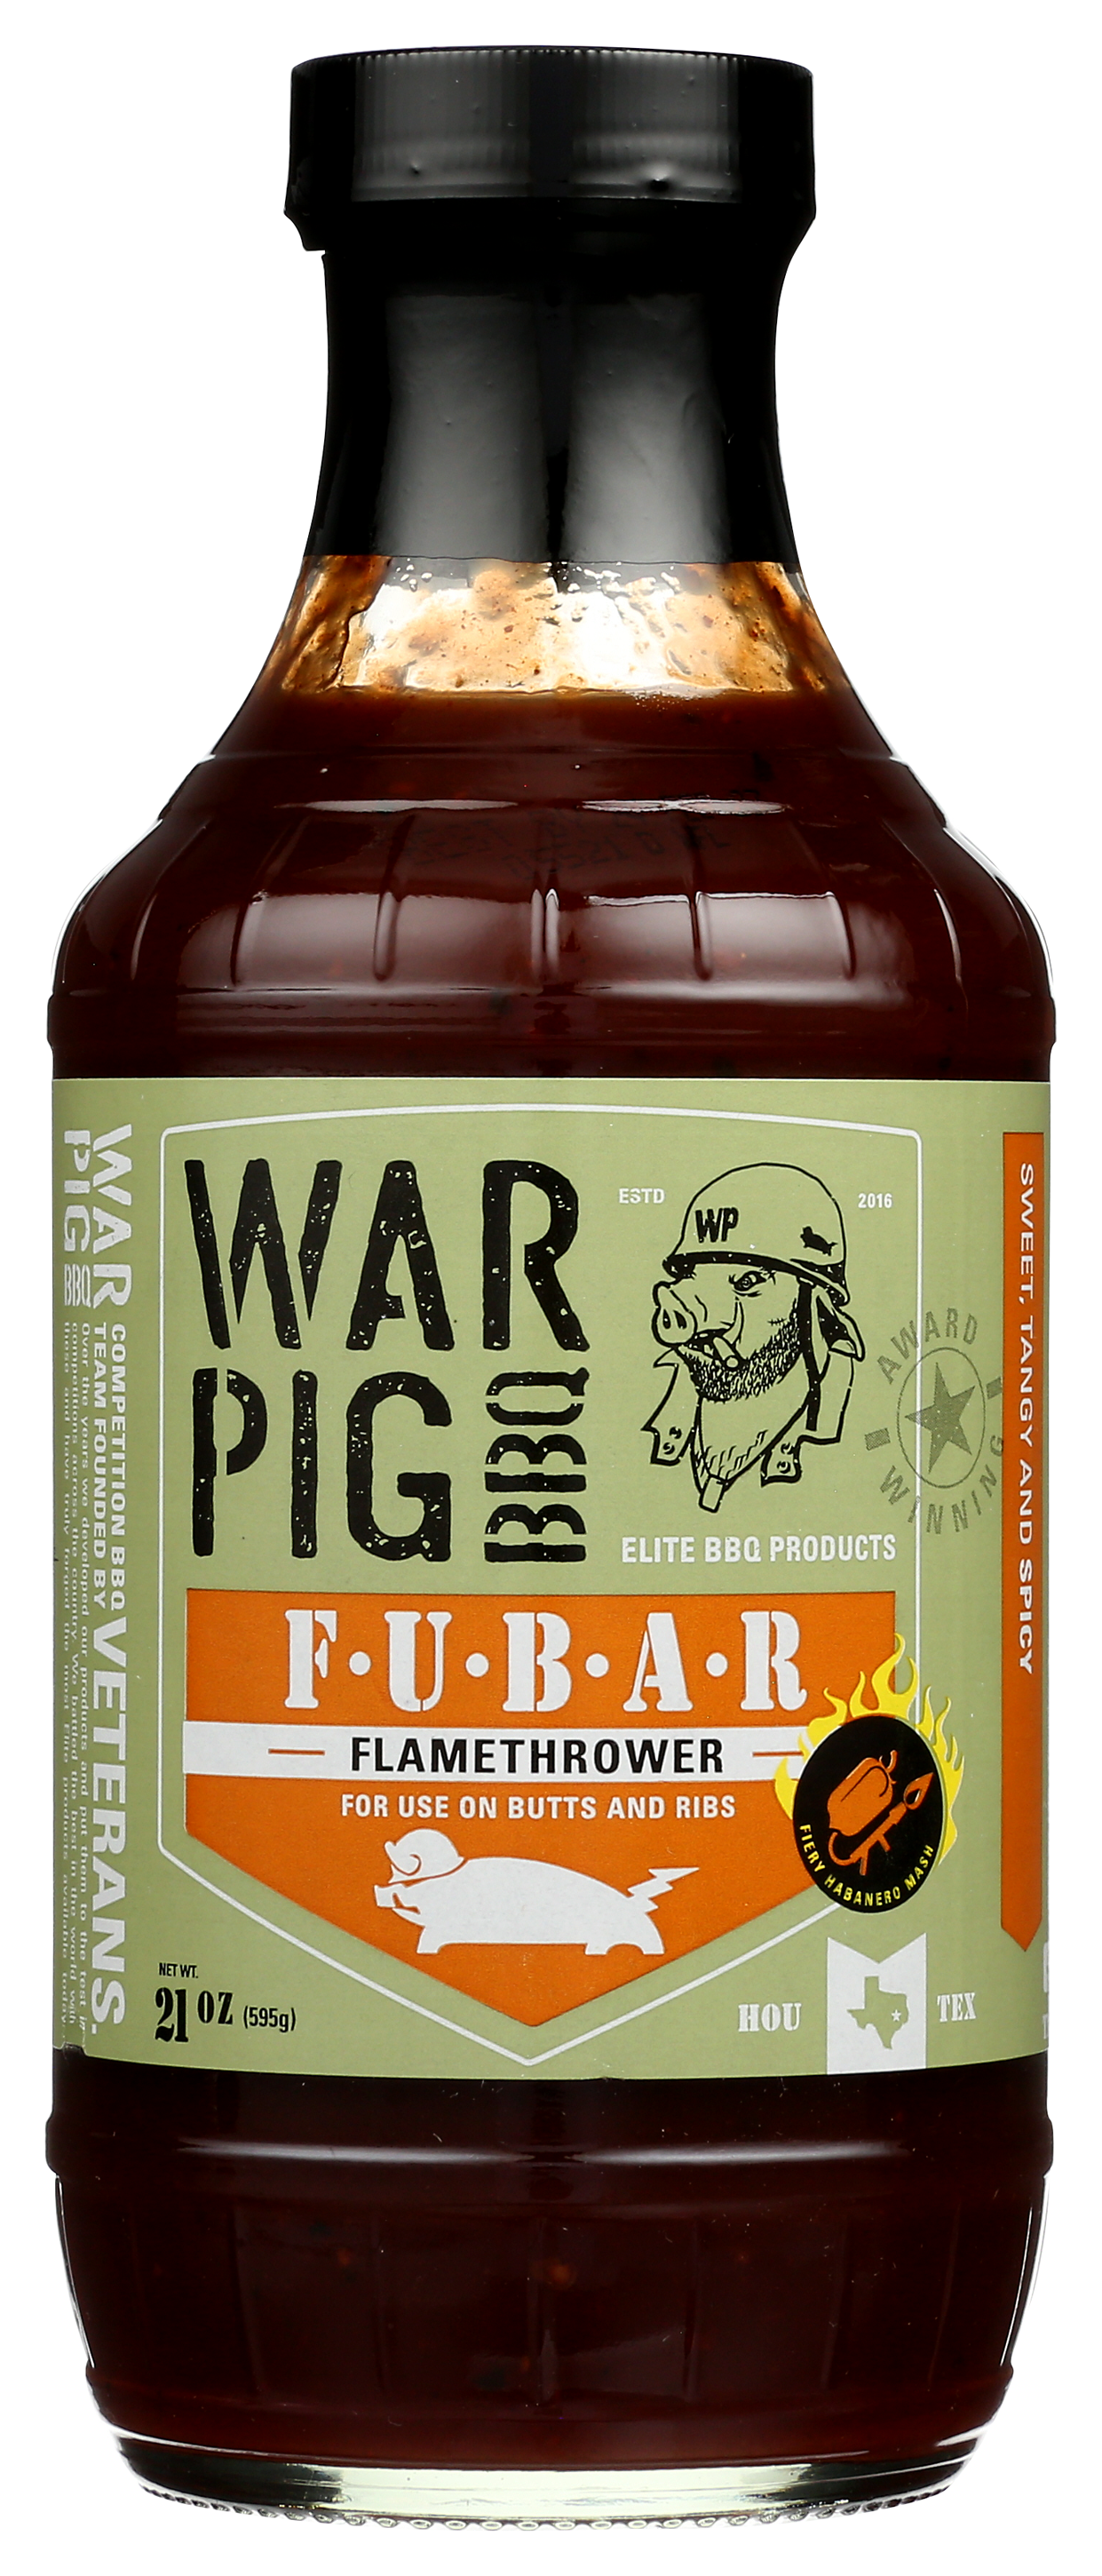 WarPig BBQ Elite BBQ Products - FUBAR Flamethrower